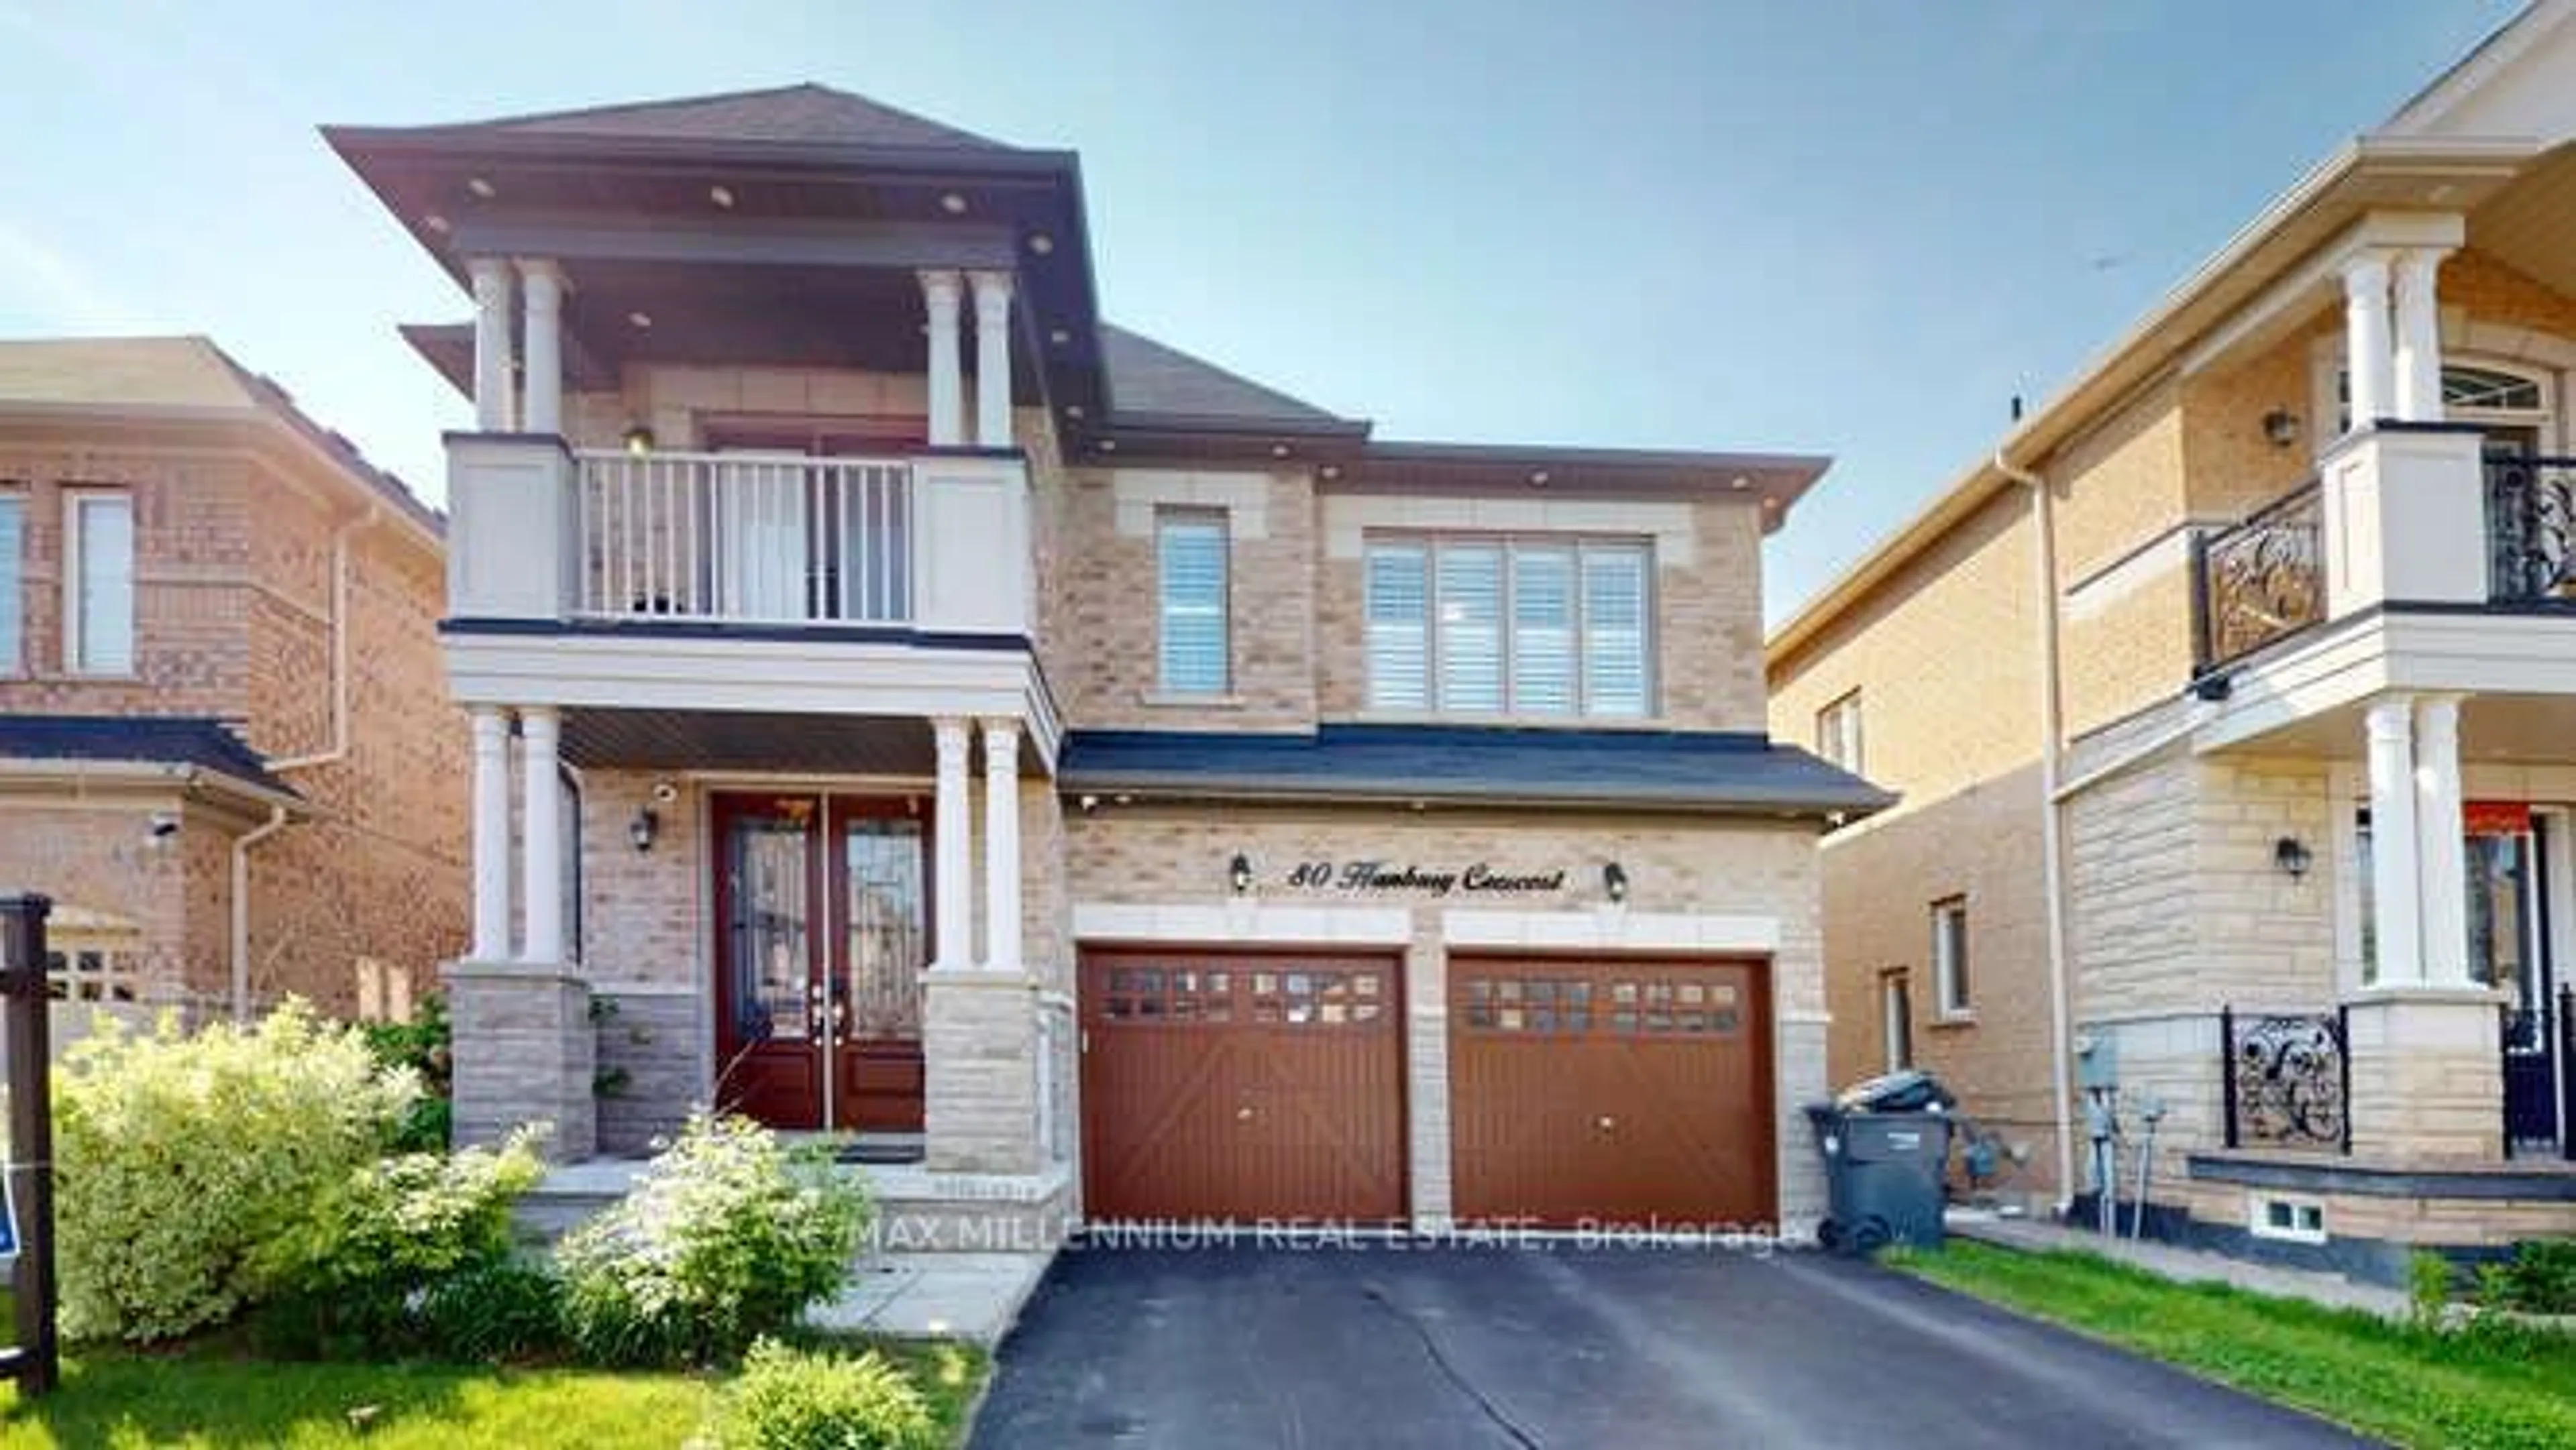 Home with brick exterior material for 80 Hanbury Cres, Brampton Ontario L6X 5N7